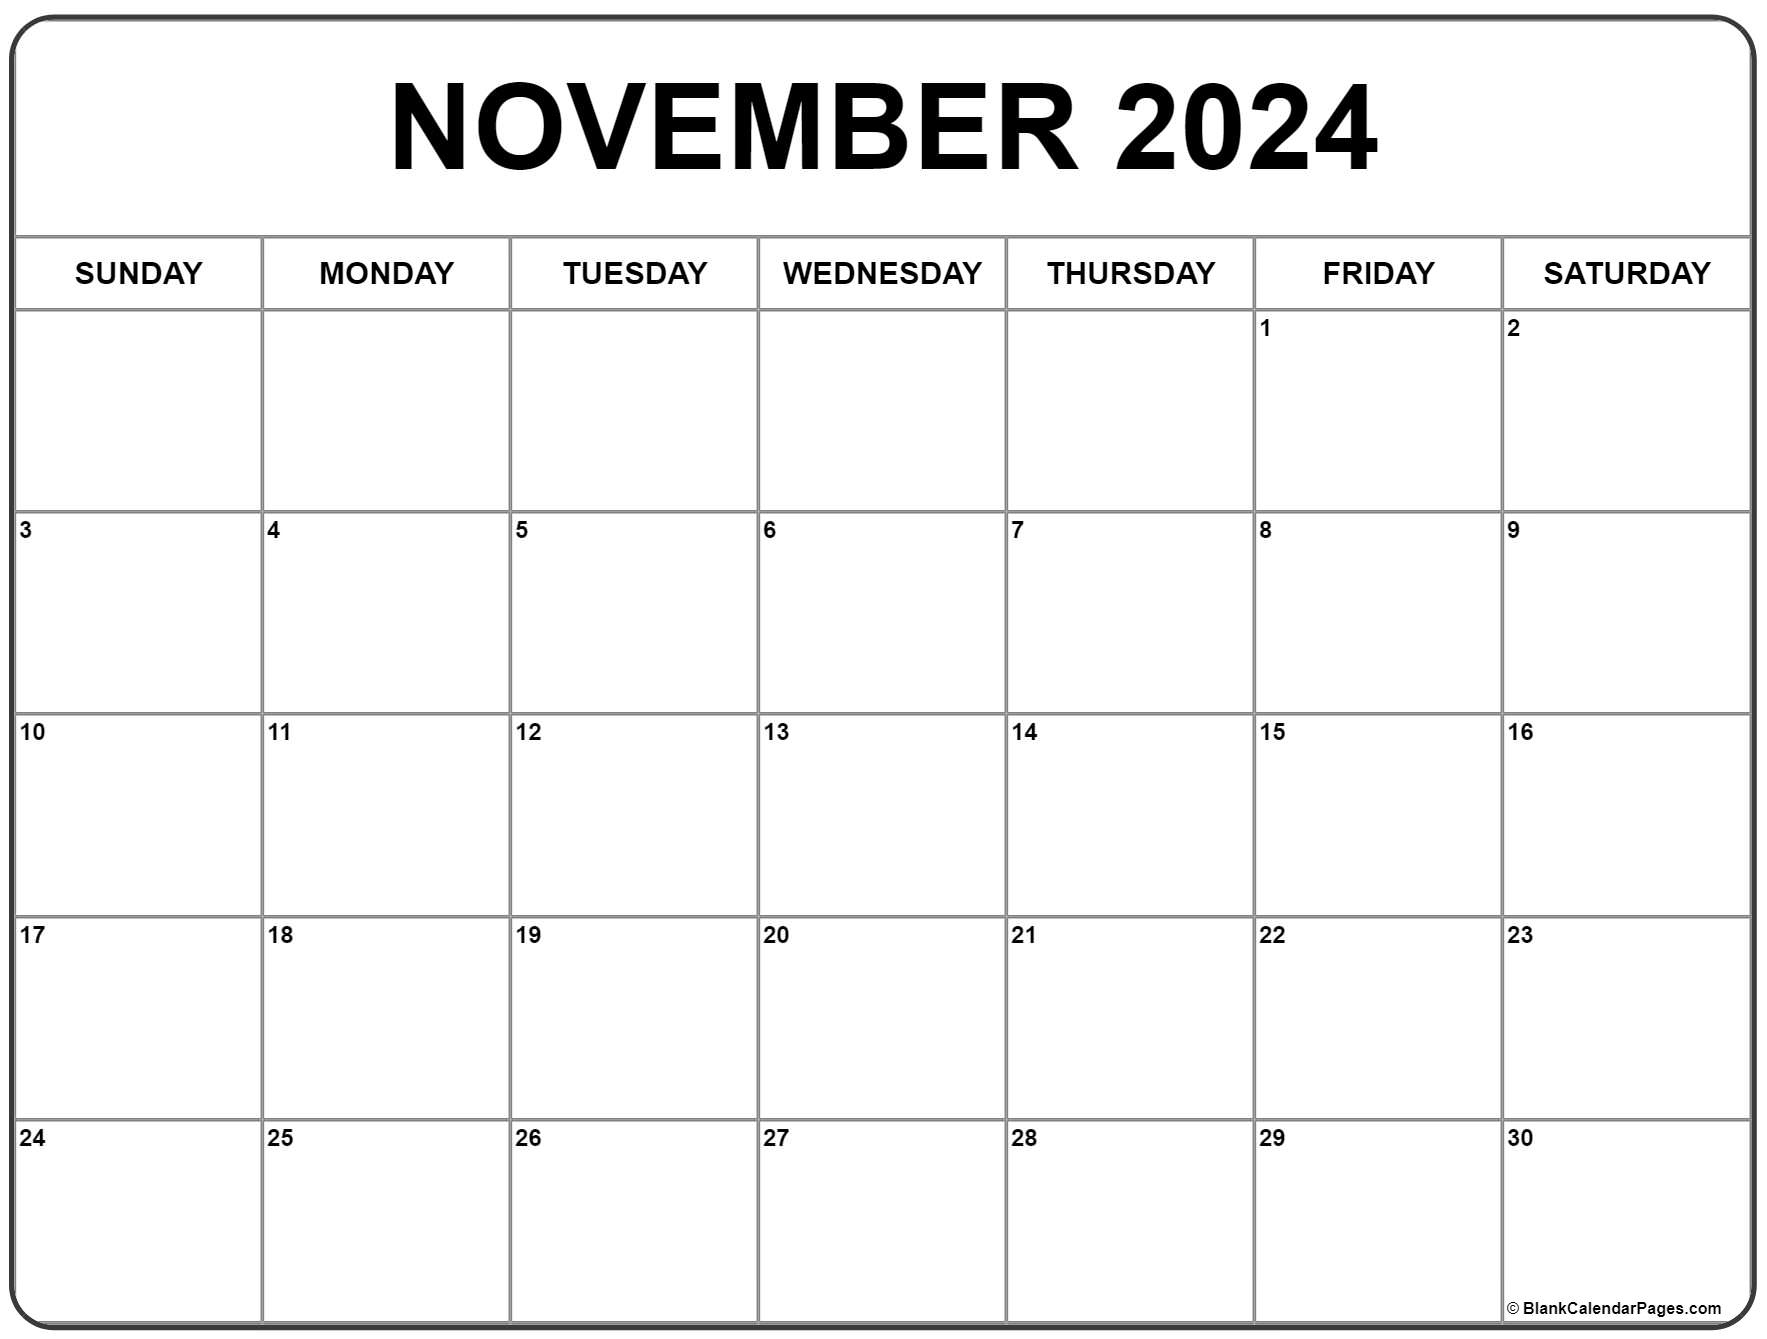 November 2024 Calendar Free Printable Calendar - Free Printable 2024 Calendar November